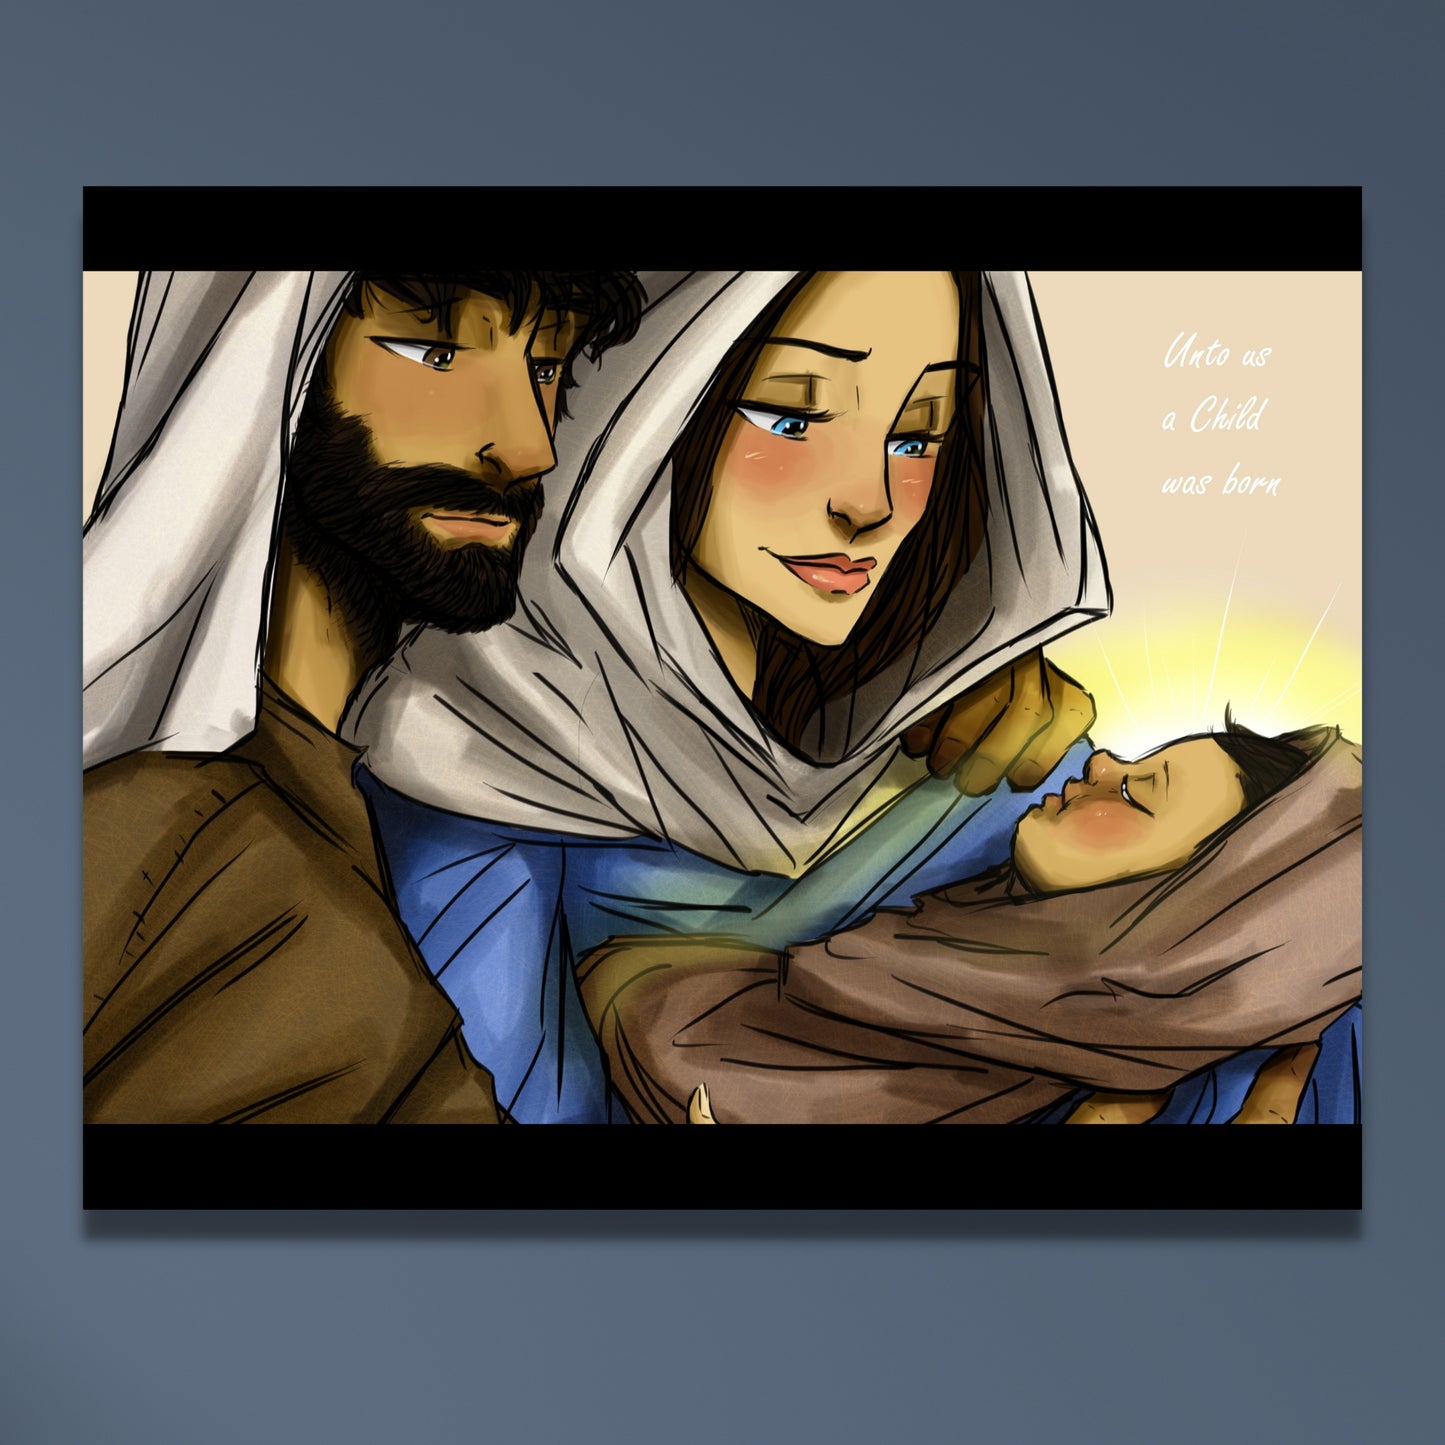 Baby Jesus, Mary, and Joseph Original Art Giclée - Inspirational Art Print on Canvas (20x16)